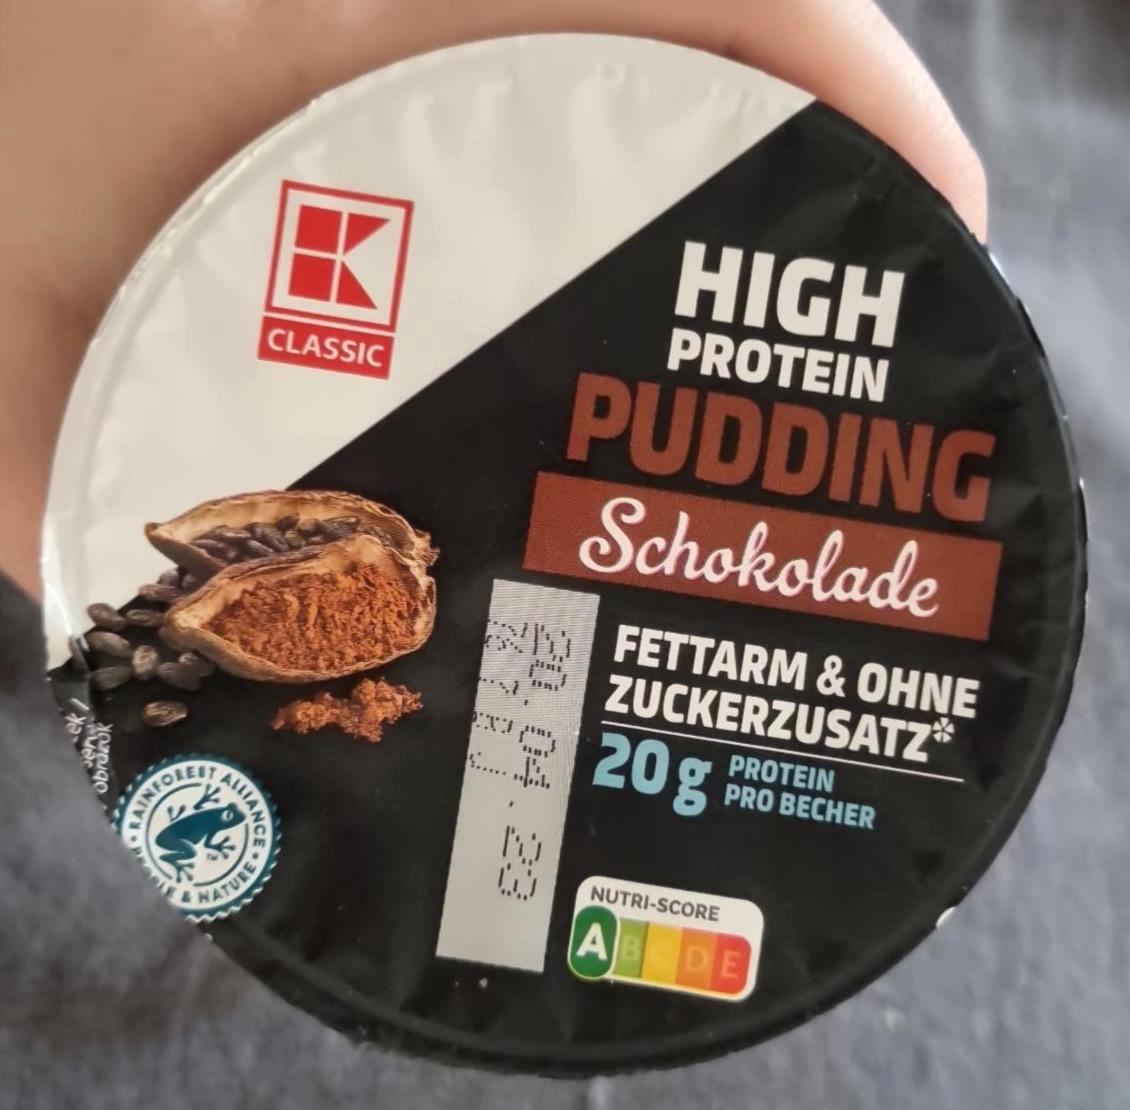 Képek - High protein pudding Schokolade K-Classic